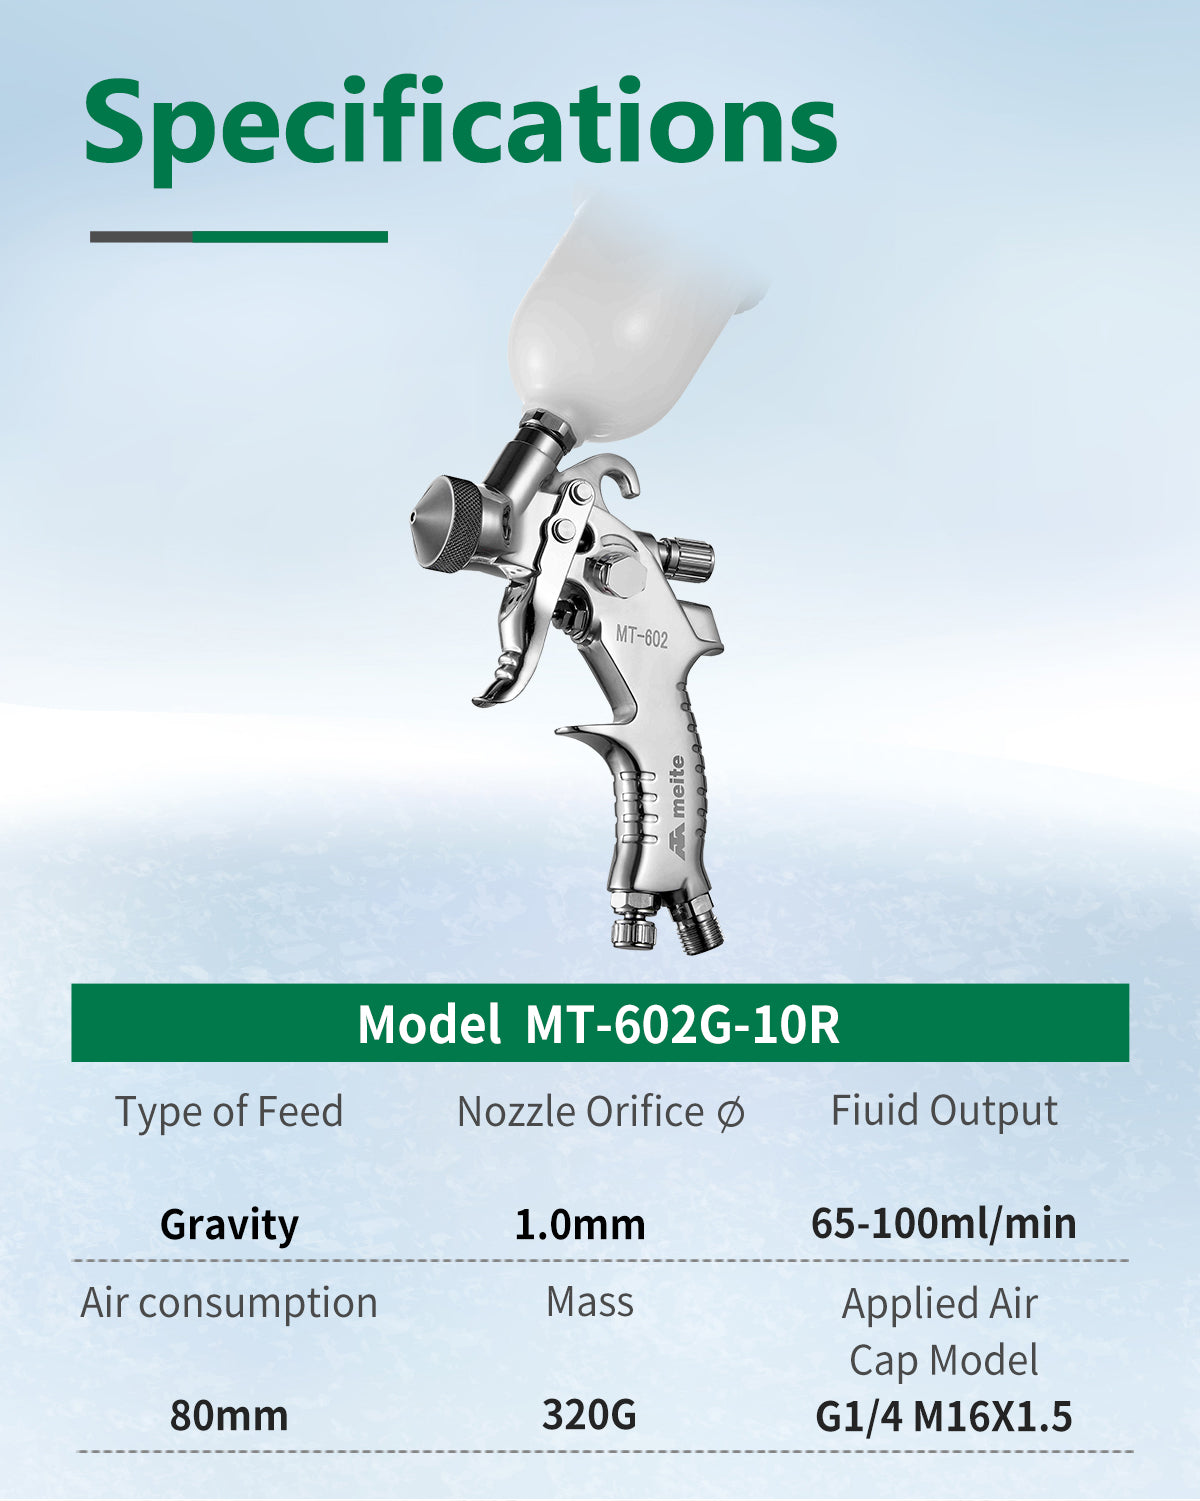 Mini HVLP Gravity Feed Spray Gun - SG1100-10